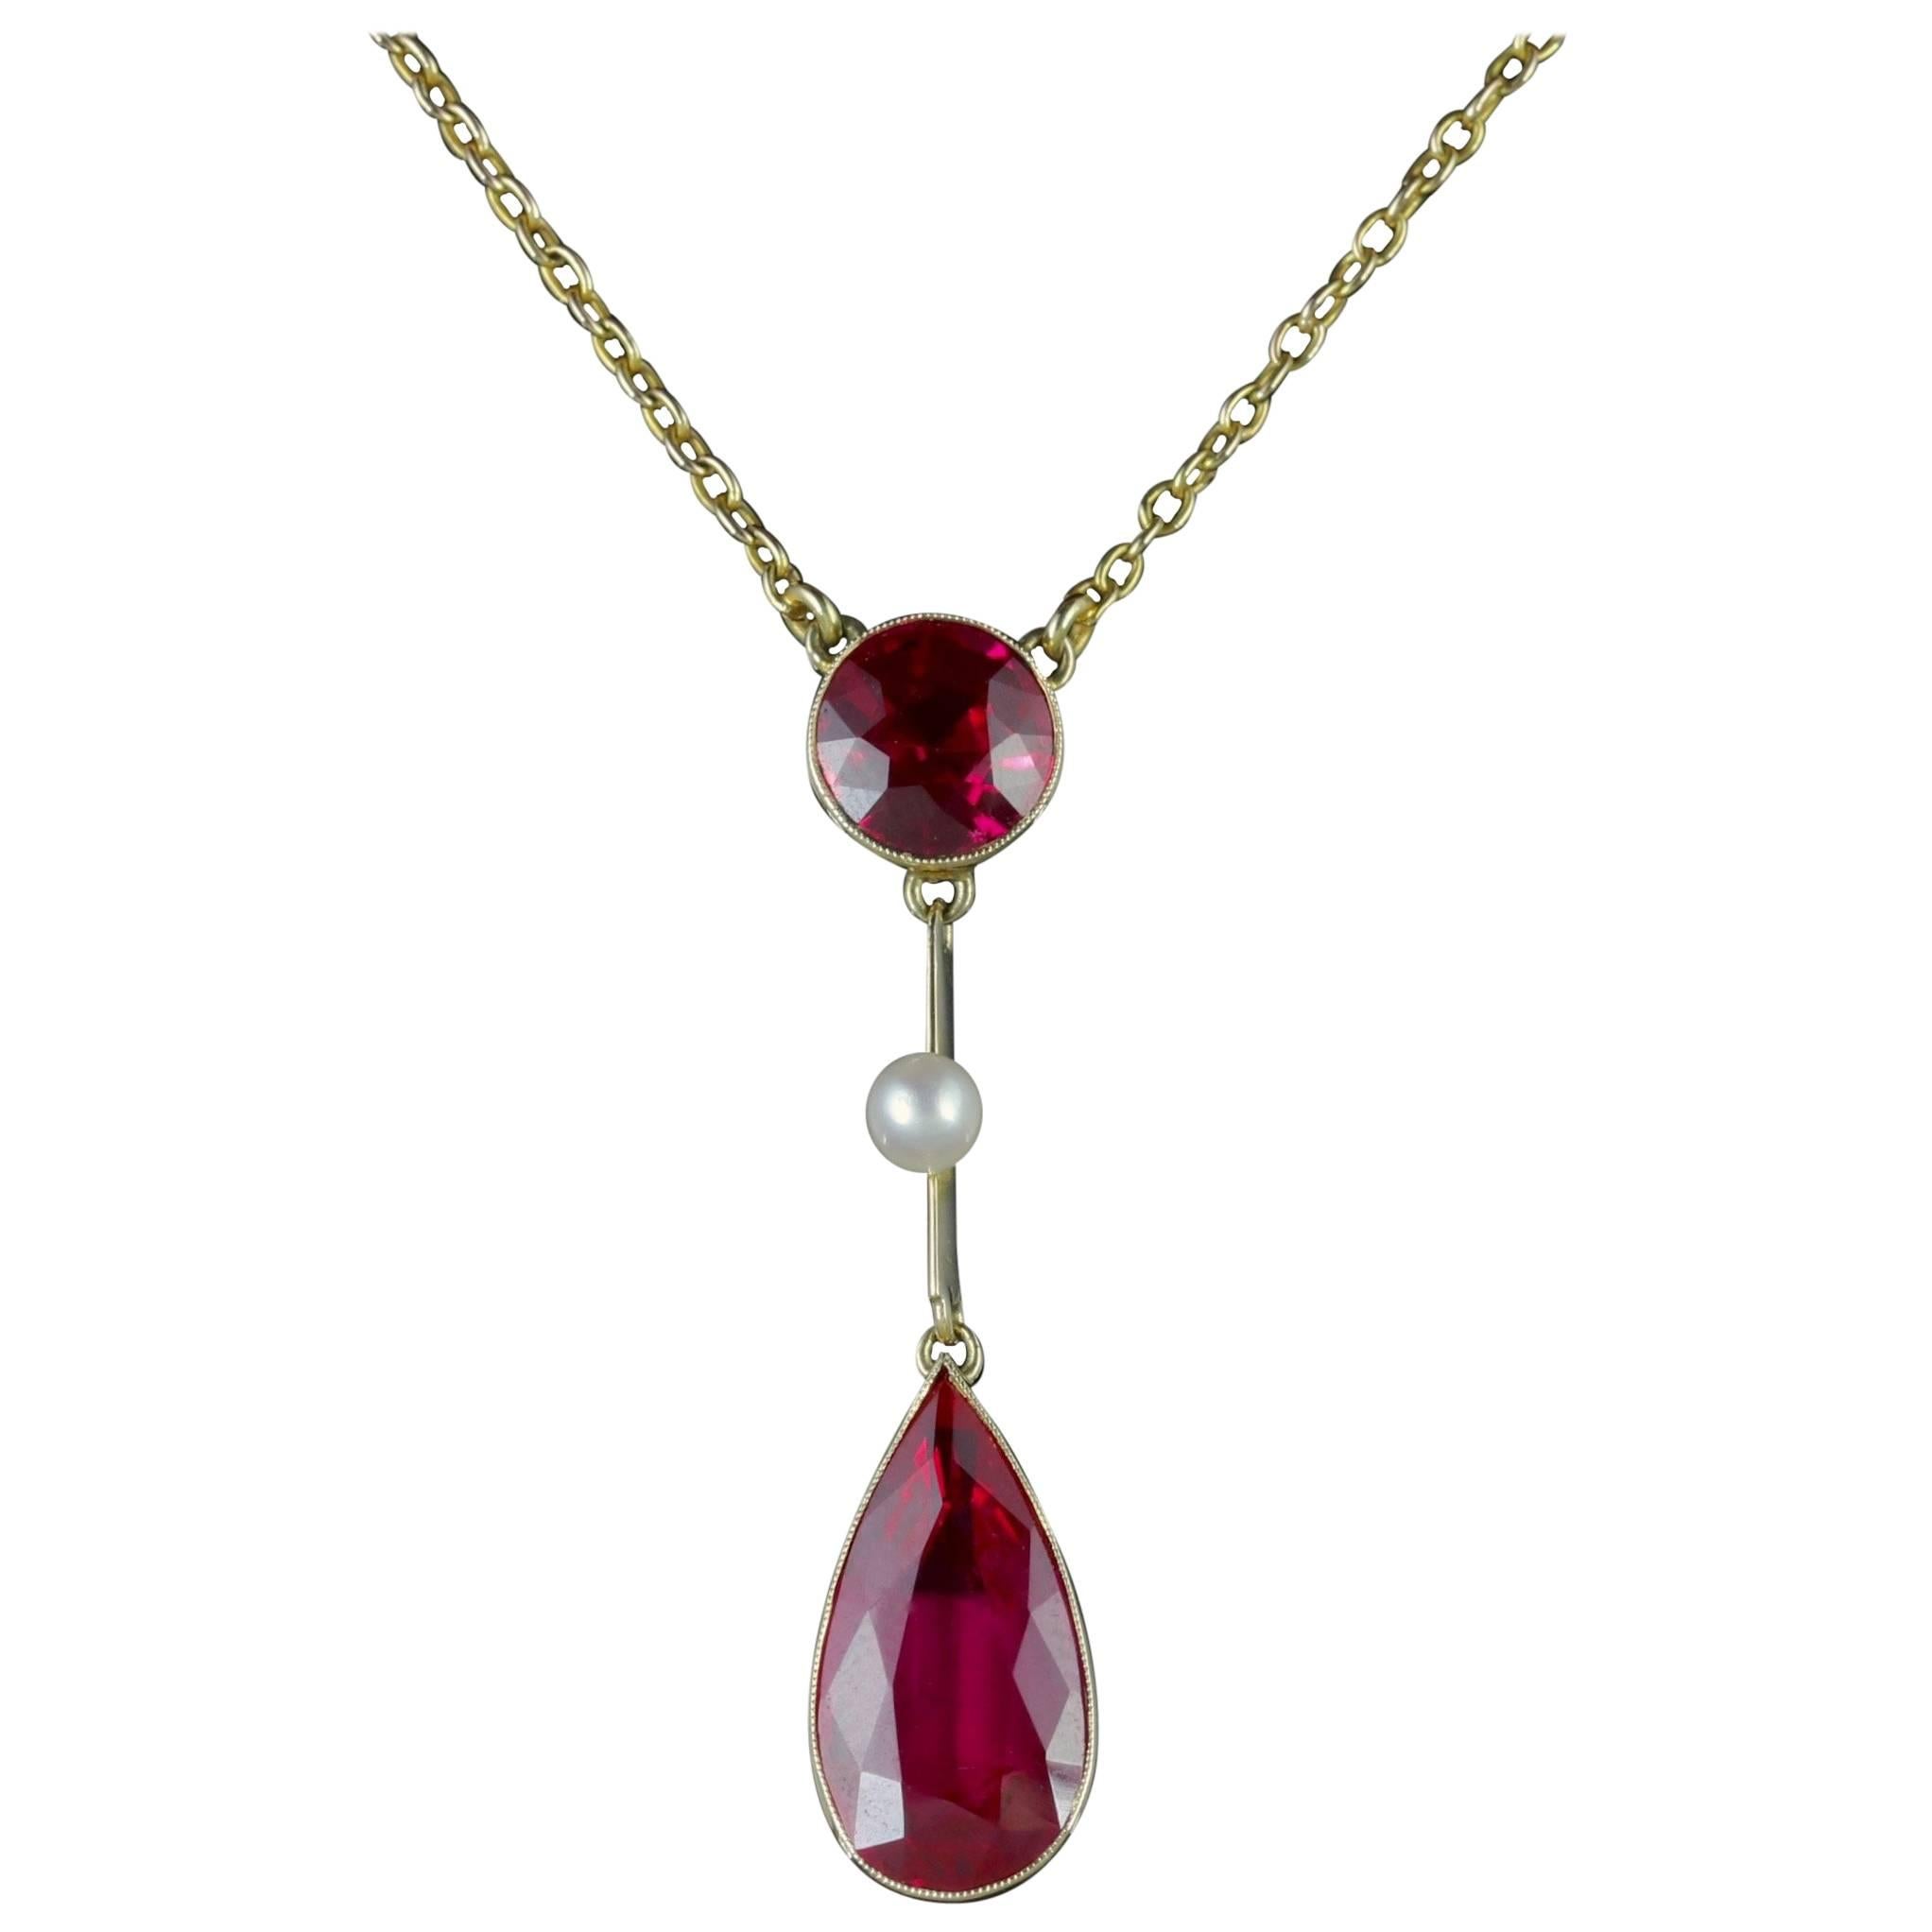 Antique Victorian Ruby Necklace 15 Carat Gold Pearl, circa 1890